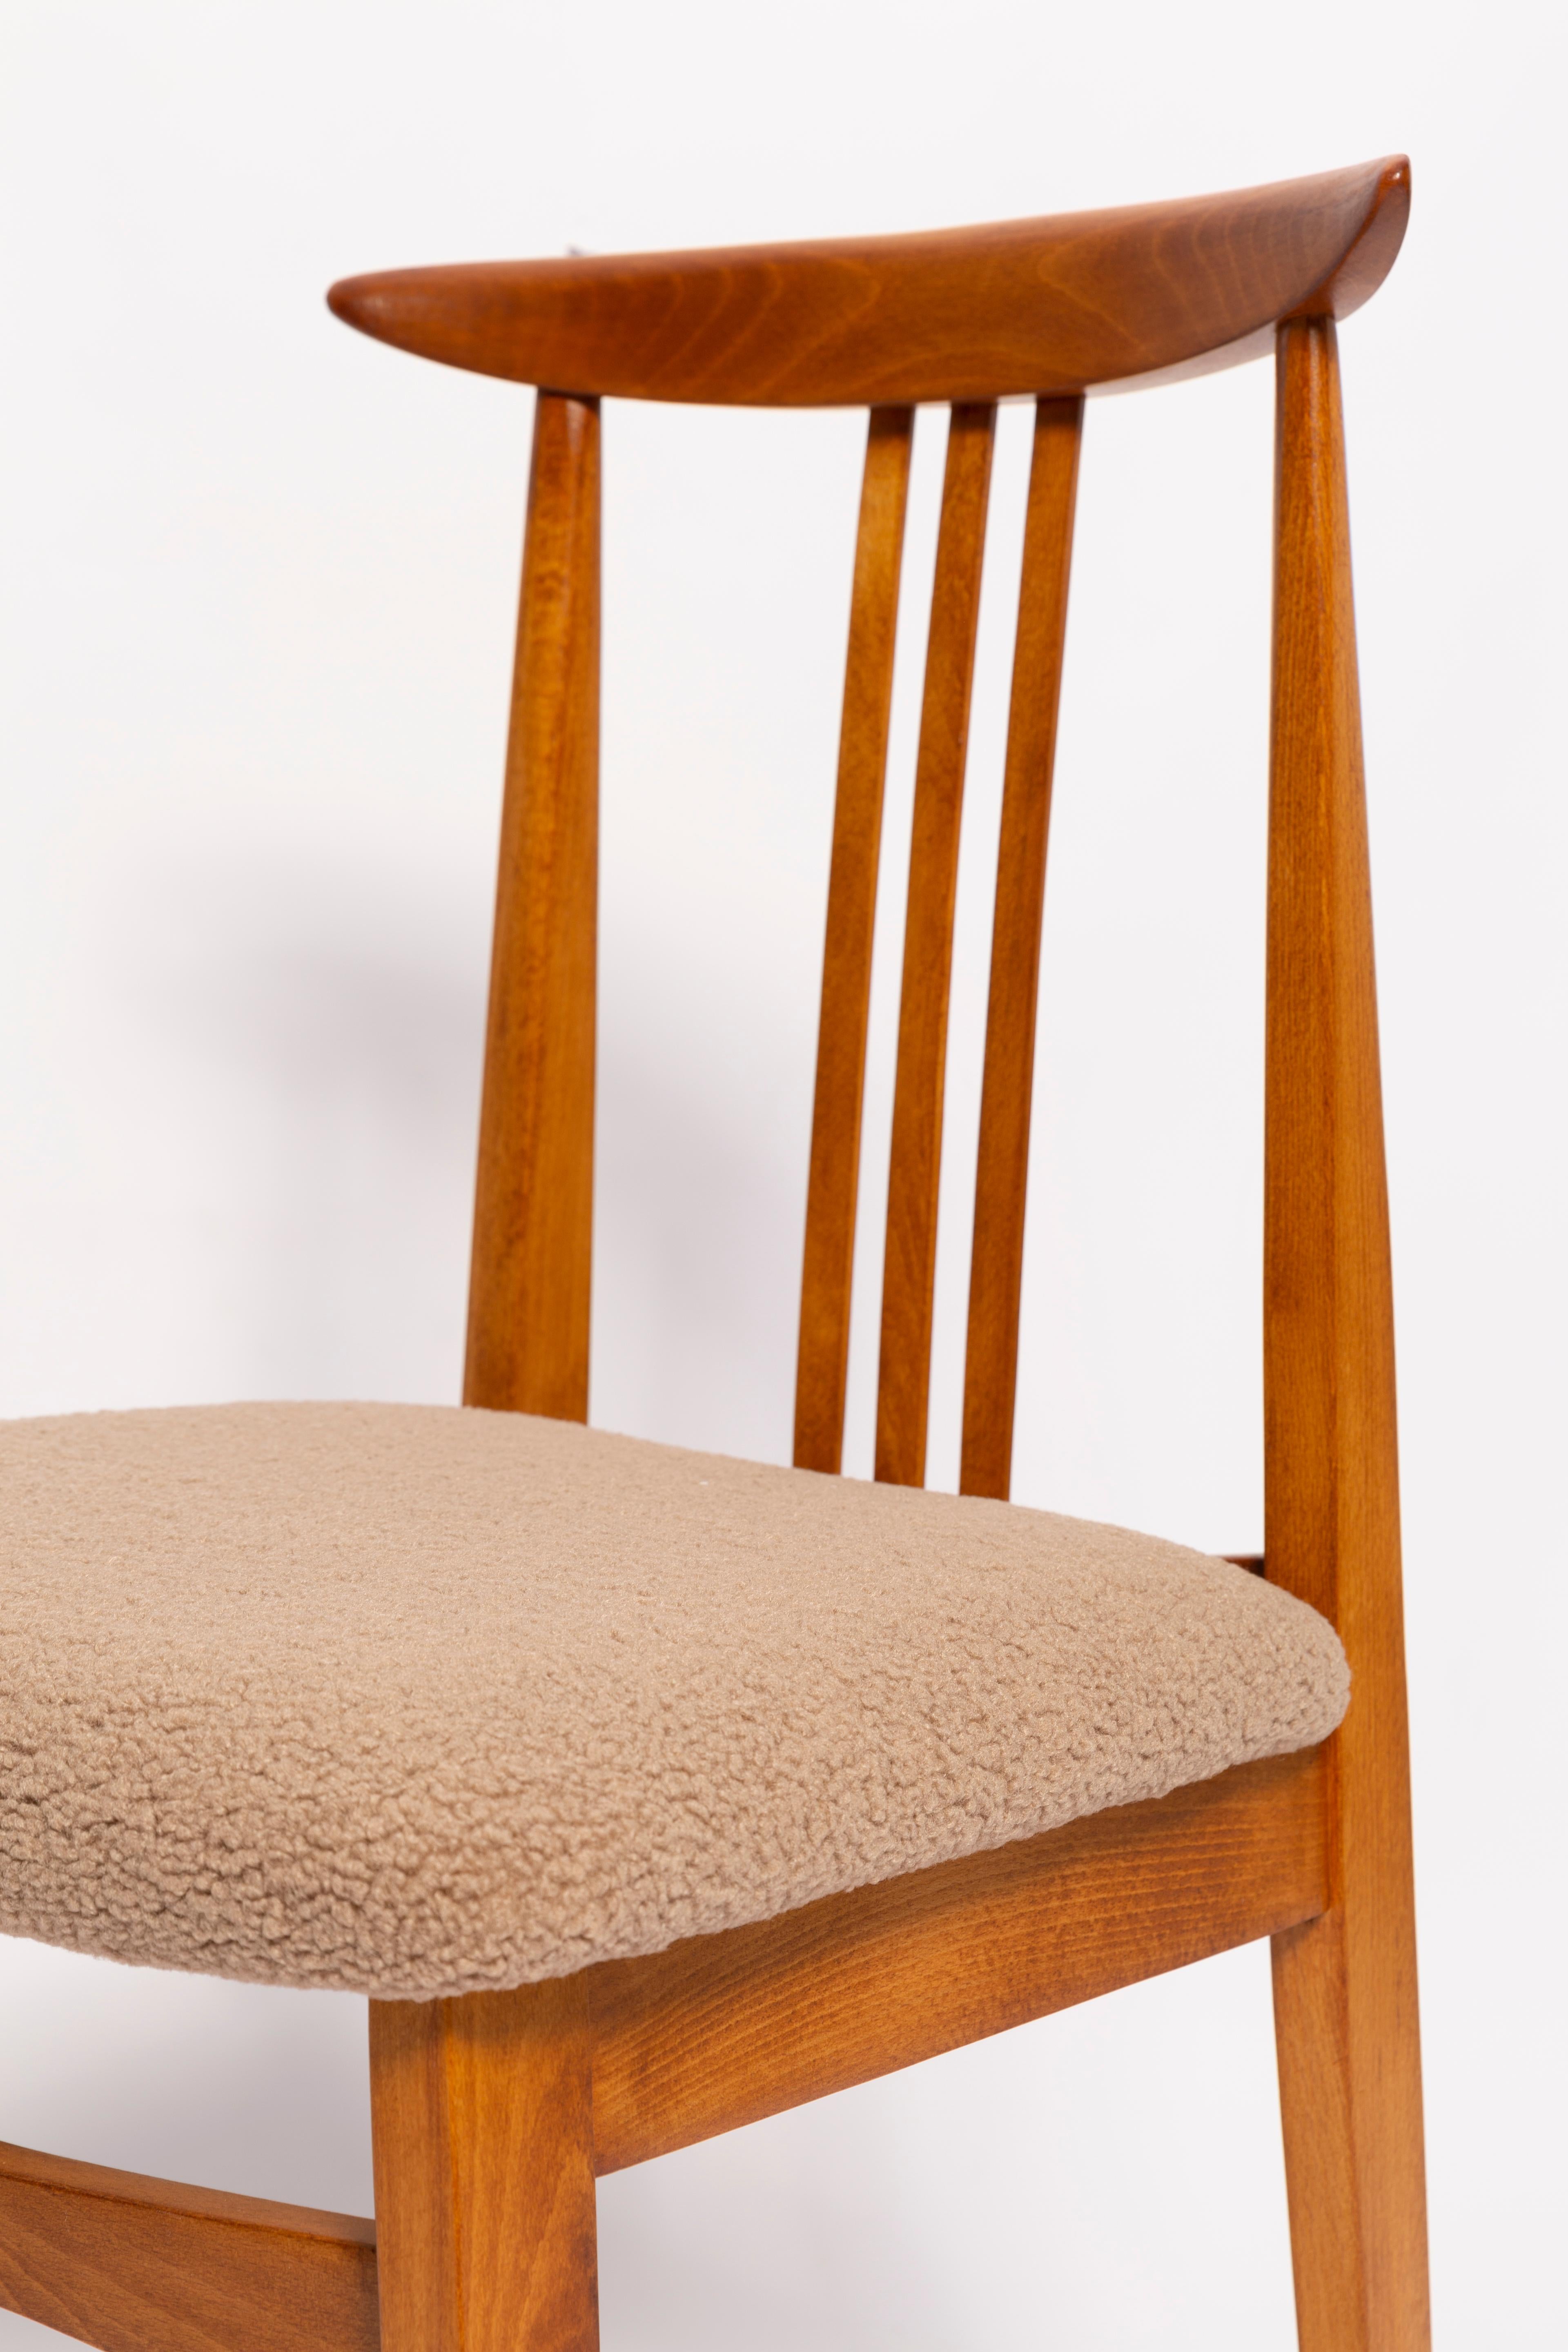 Six Mid-Century Latte Boucle Chairs, Medium Wood, M. Zielinski, Europe 1960s For Sale 2